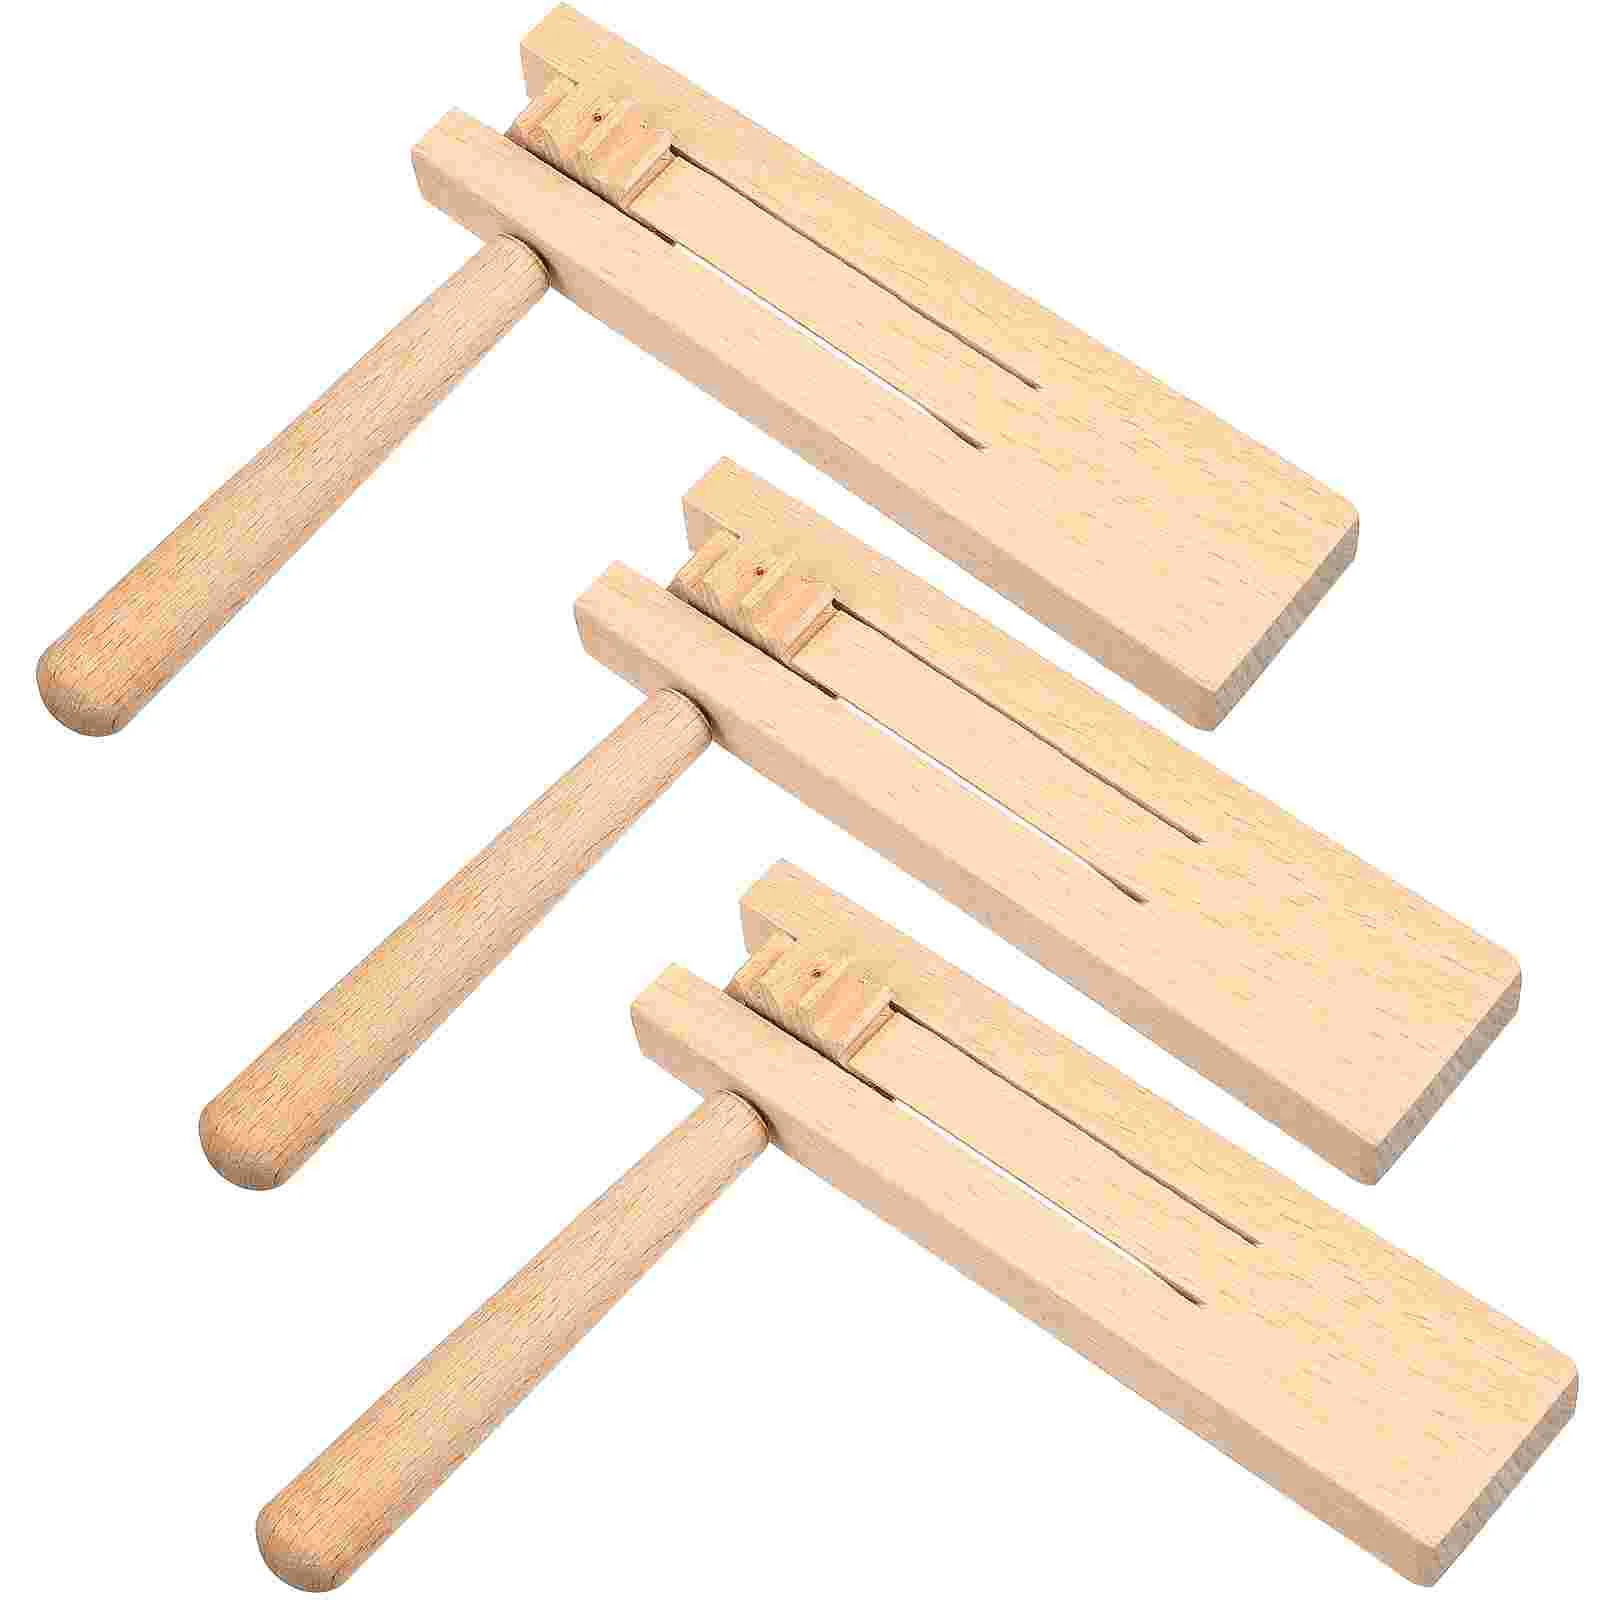 

3 Pcs Wood Toy Orff Instrument Instruments Matraca Toys Wooden Noise Maker Ratchet Sound Kids Matracas Child